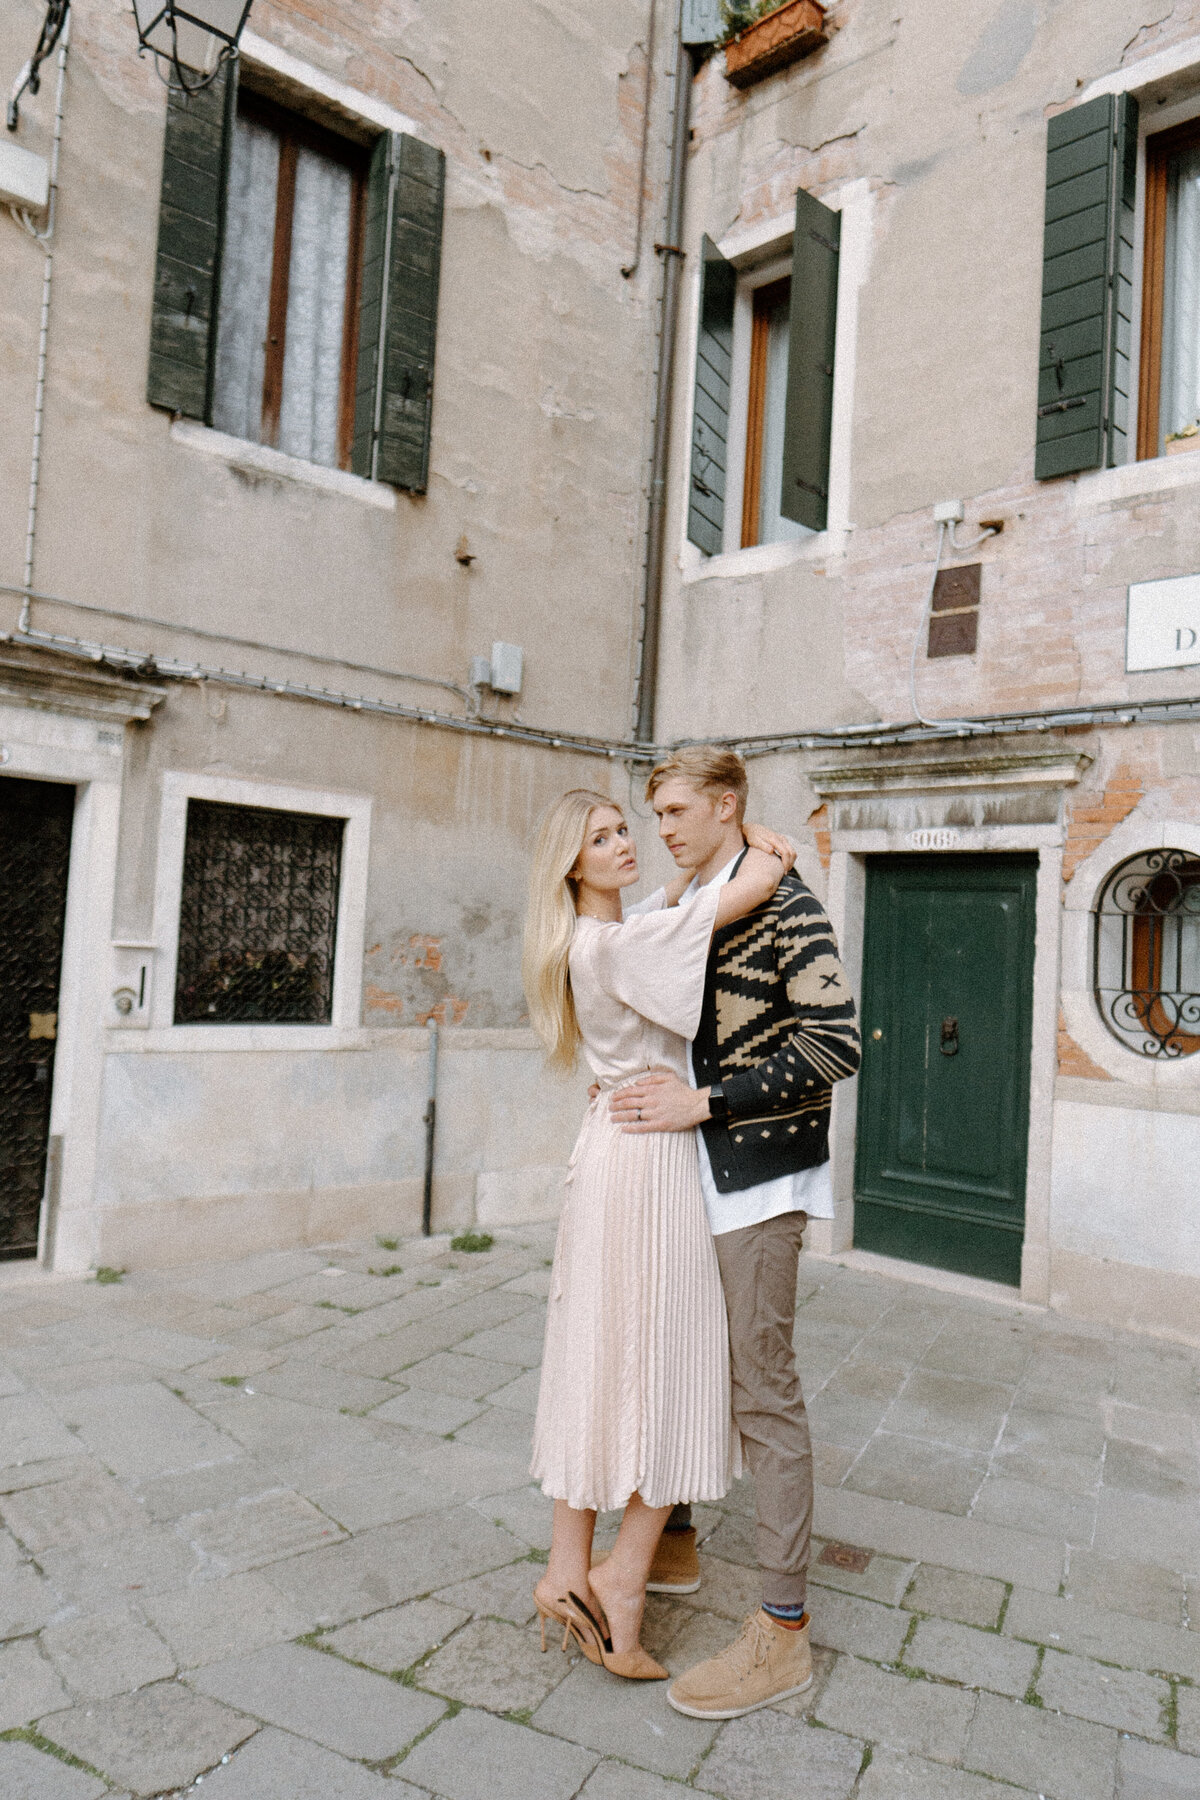 Documentary-Style-Editorial-Vogue-Italy-Destination-Wedding-Leah-Gunn-Photography-15